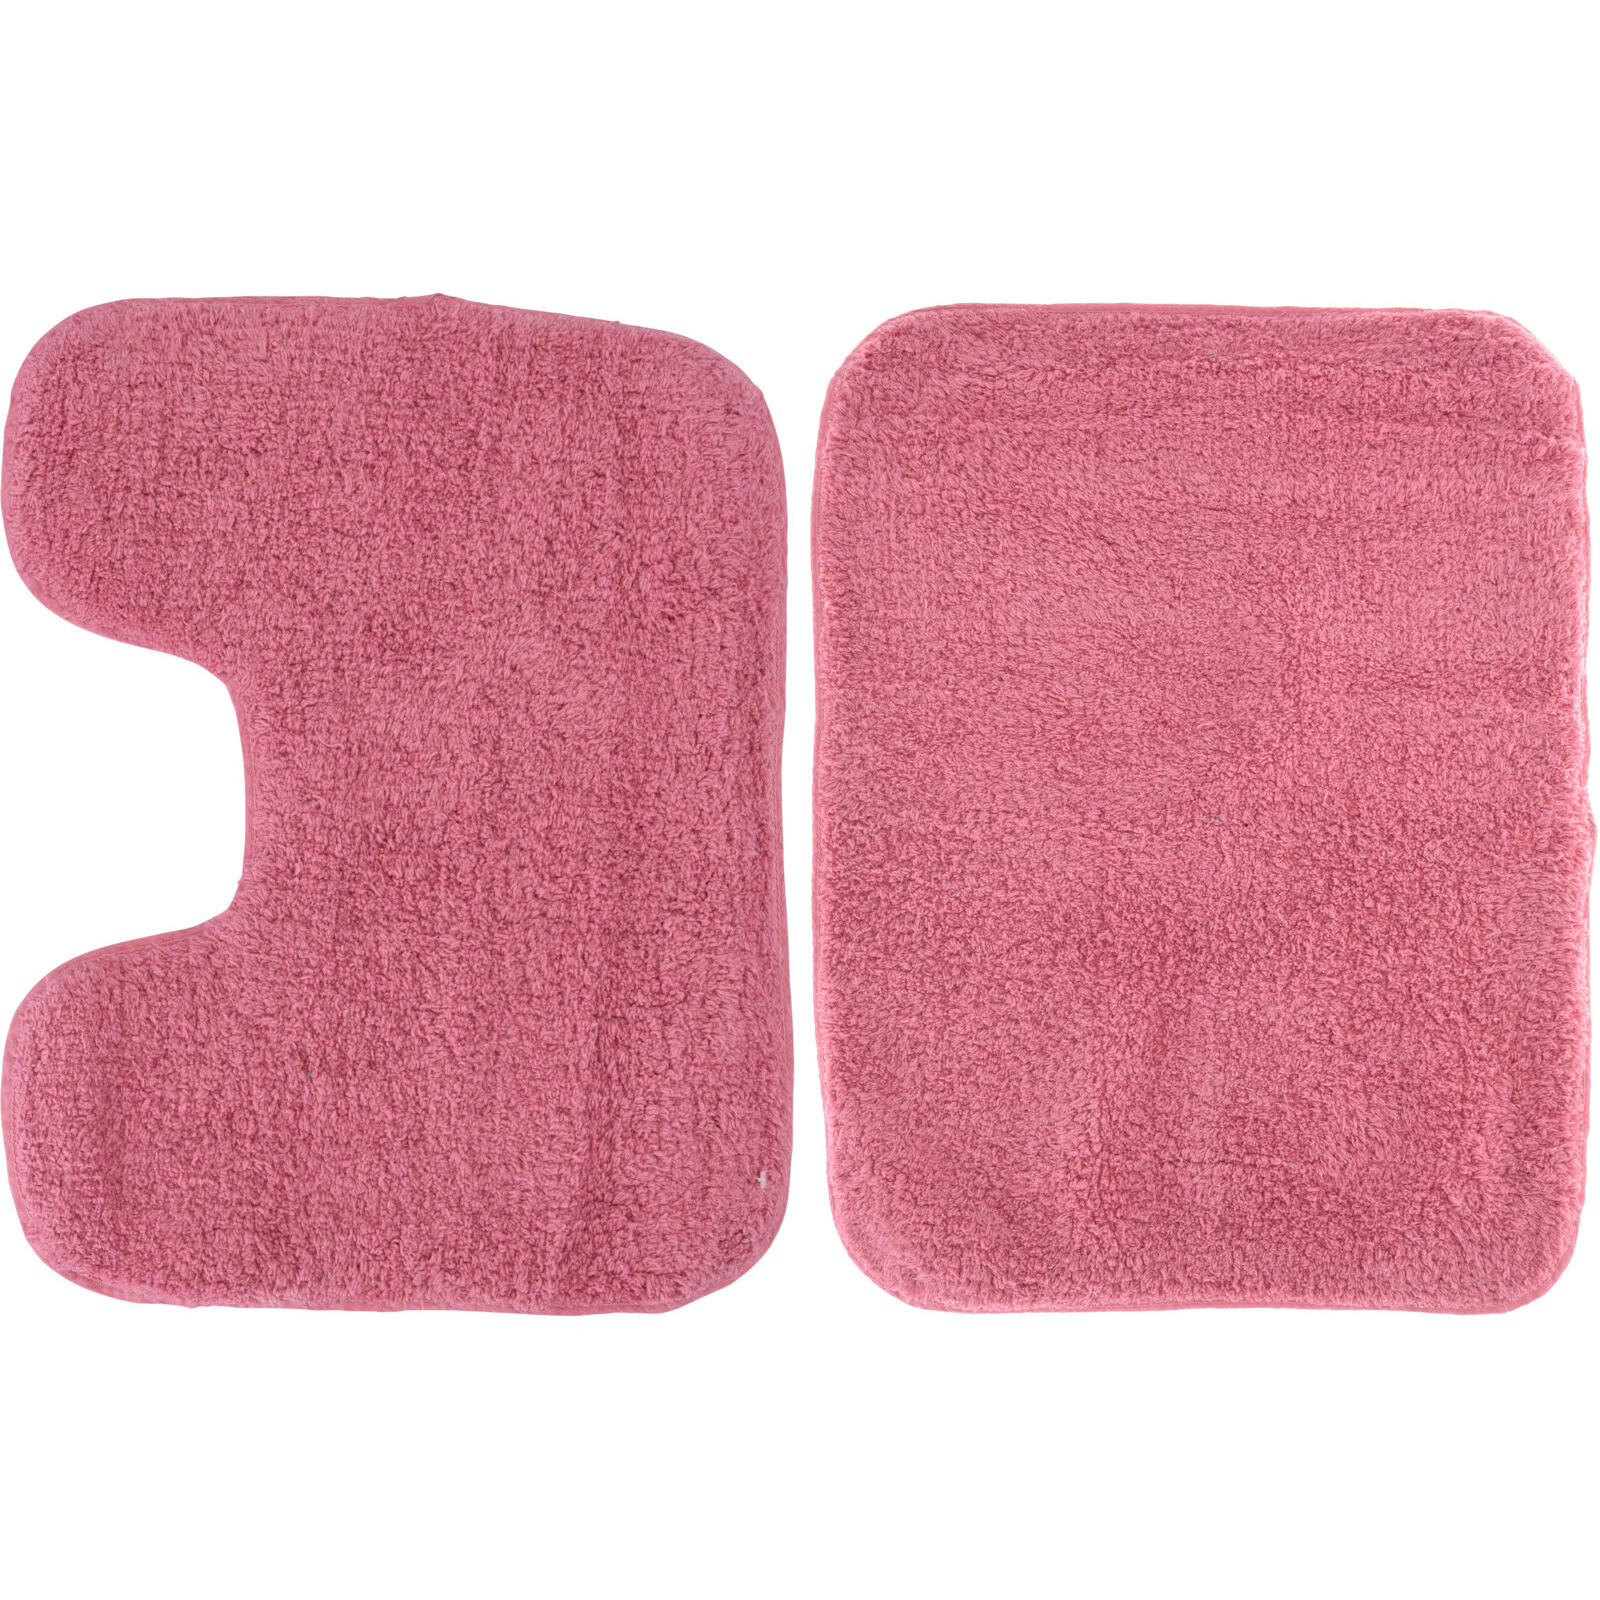 Badkamer-douche-toilet mat set fuchsia roze